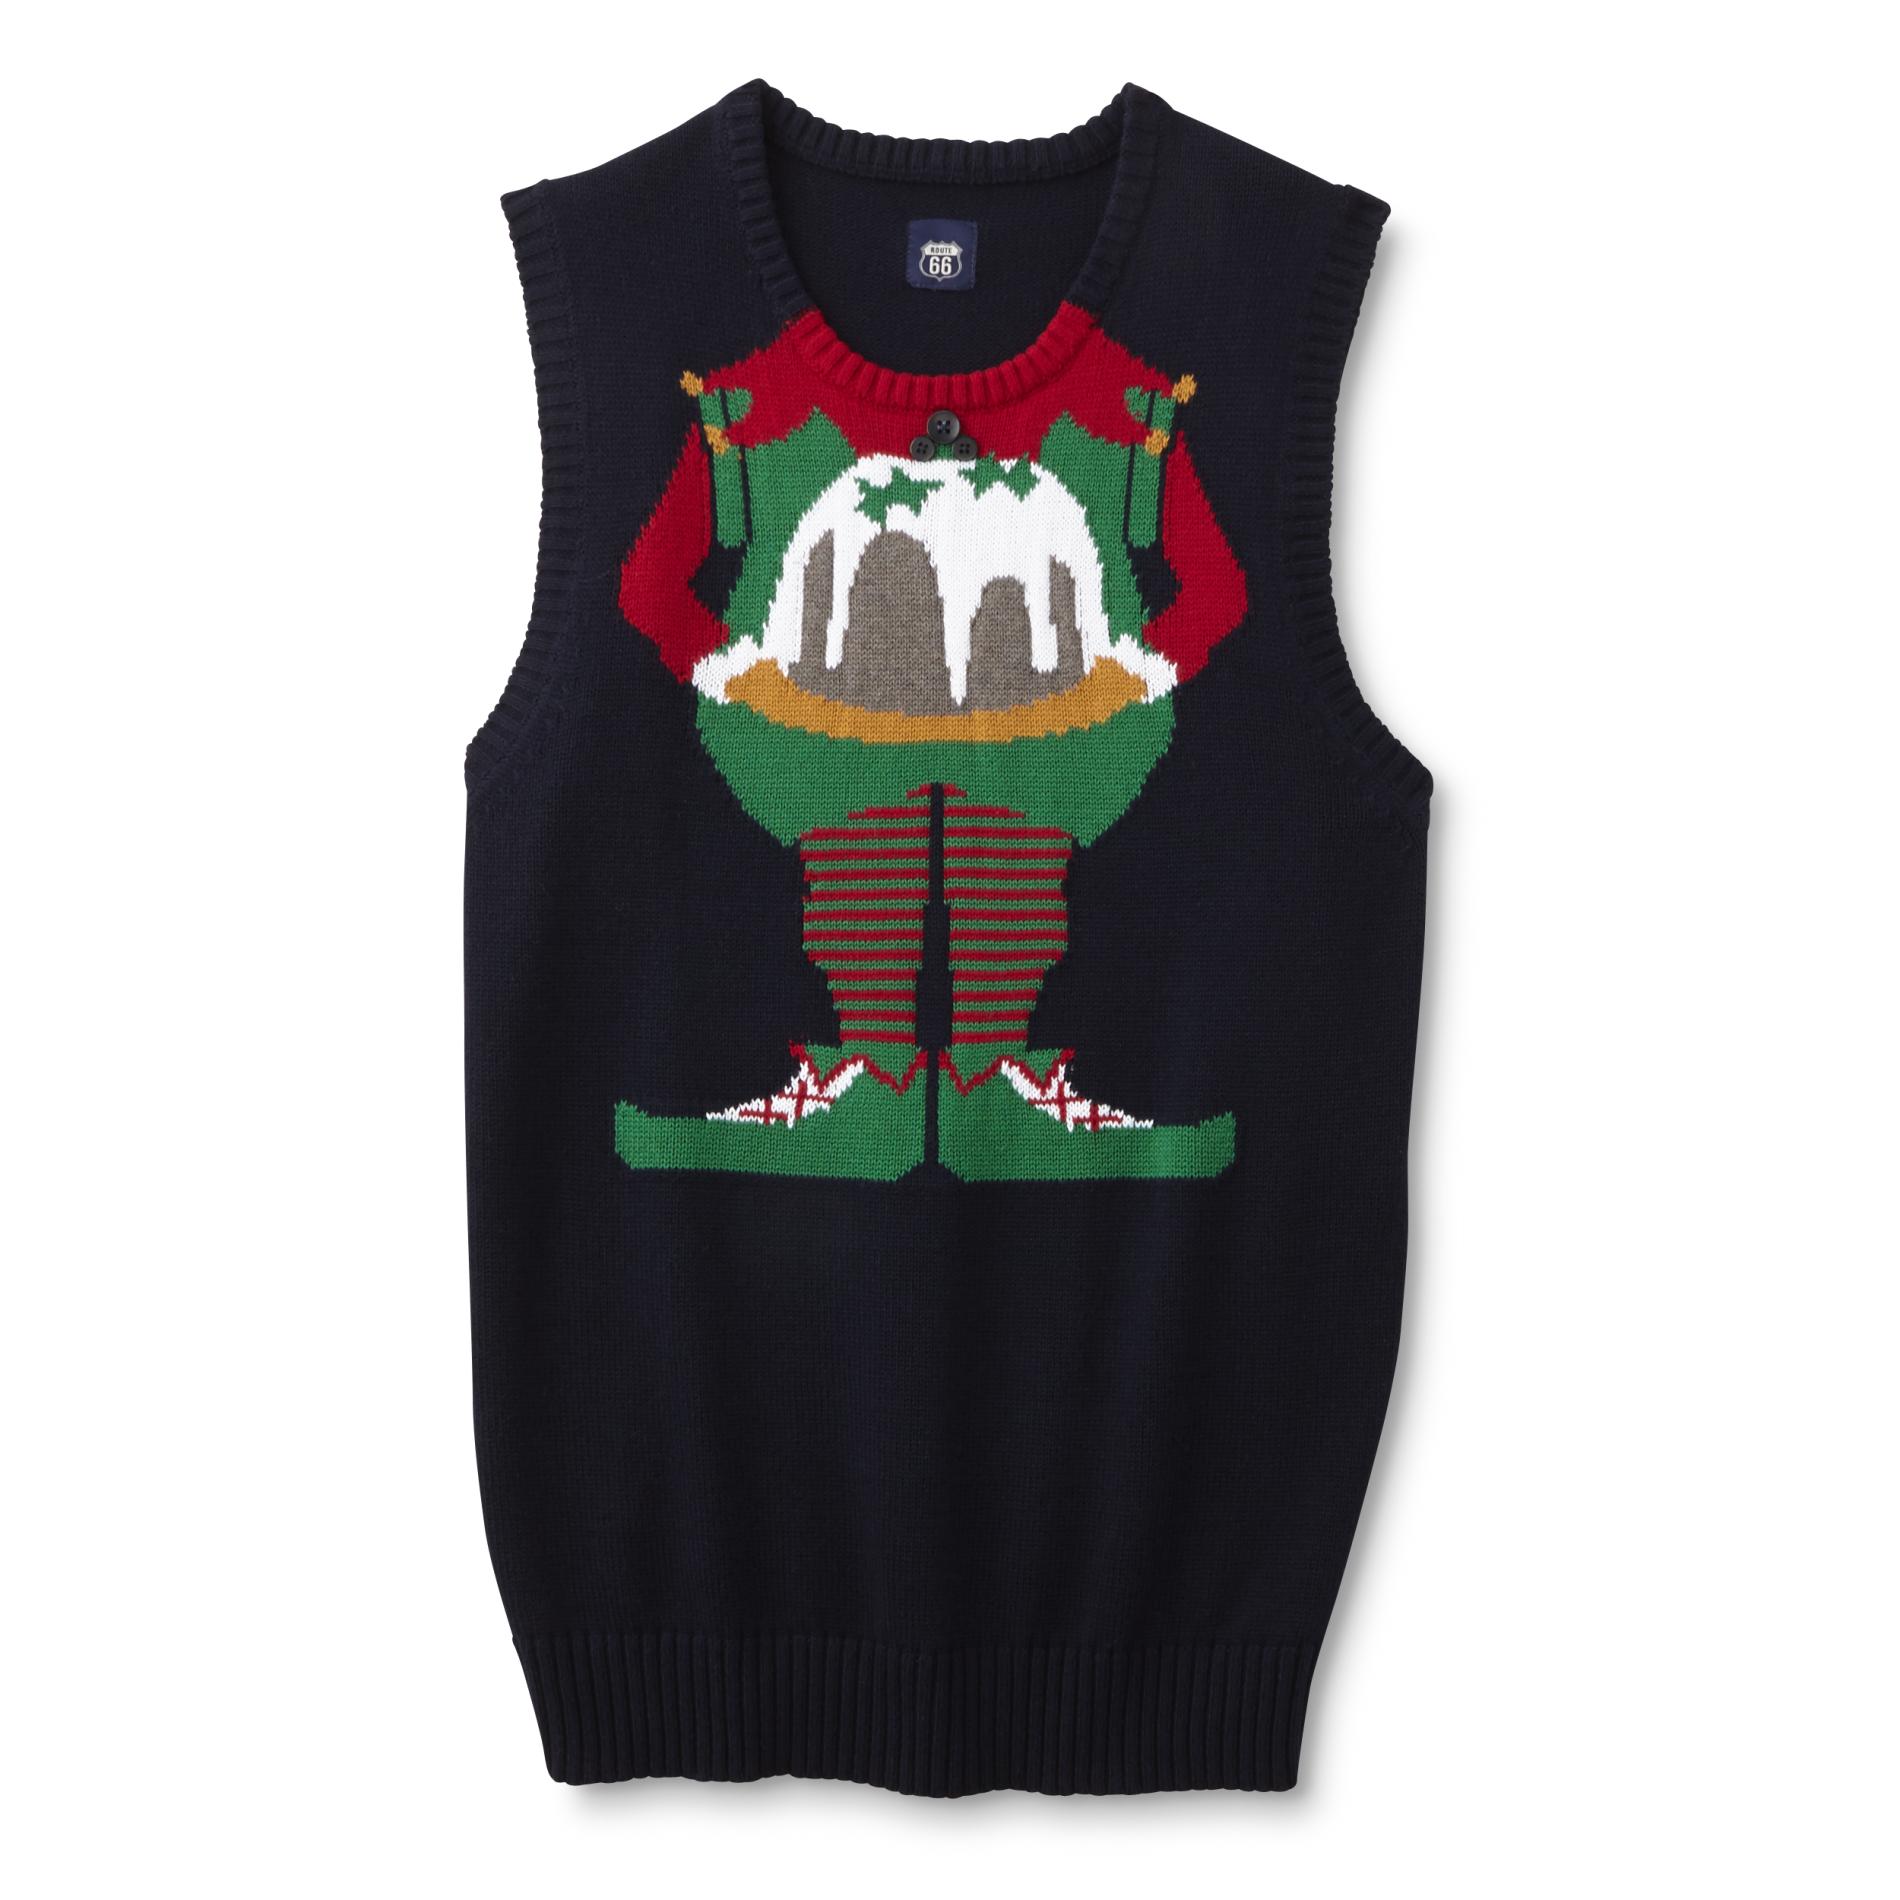 Route 66 Men's Christmas Sweater Vest - Elf